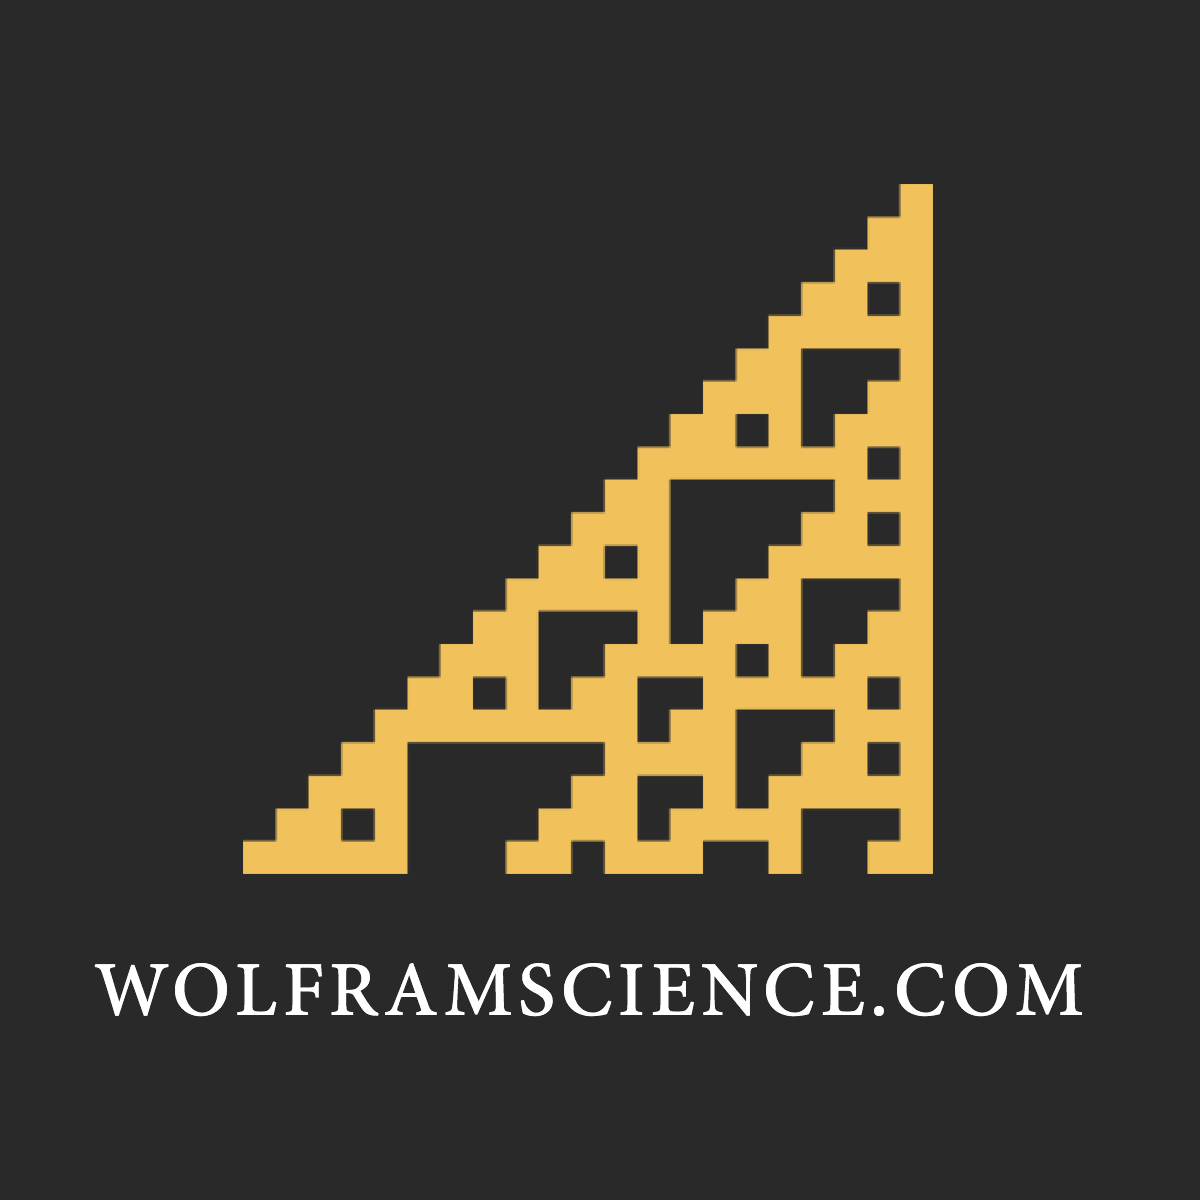 (c) Wolframscience.com